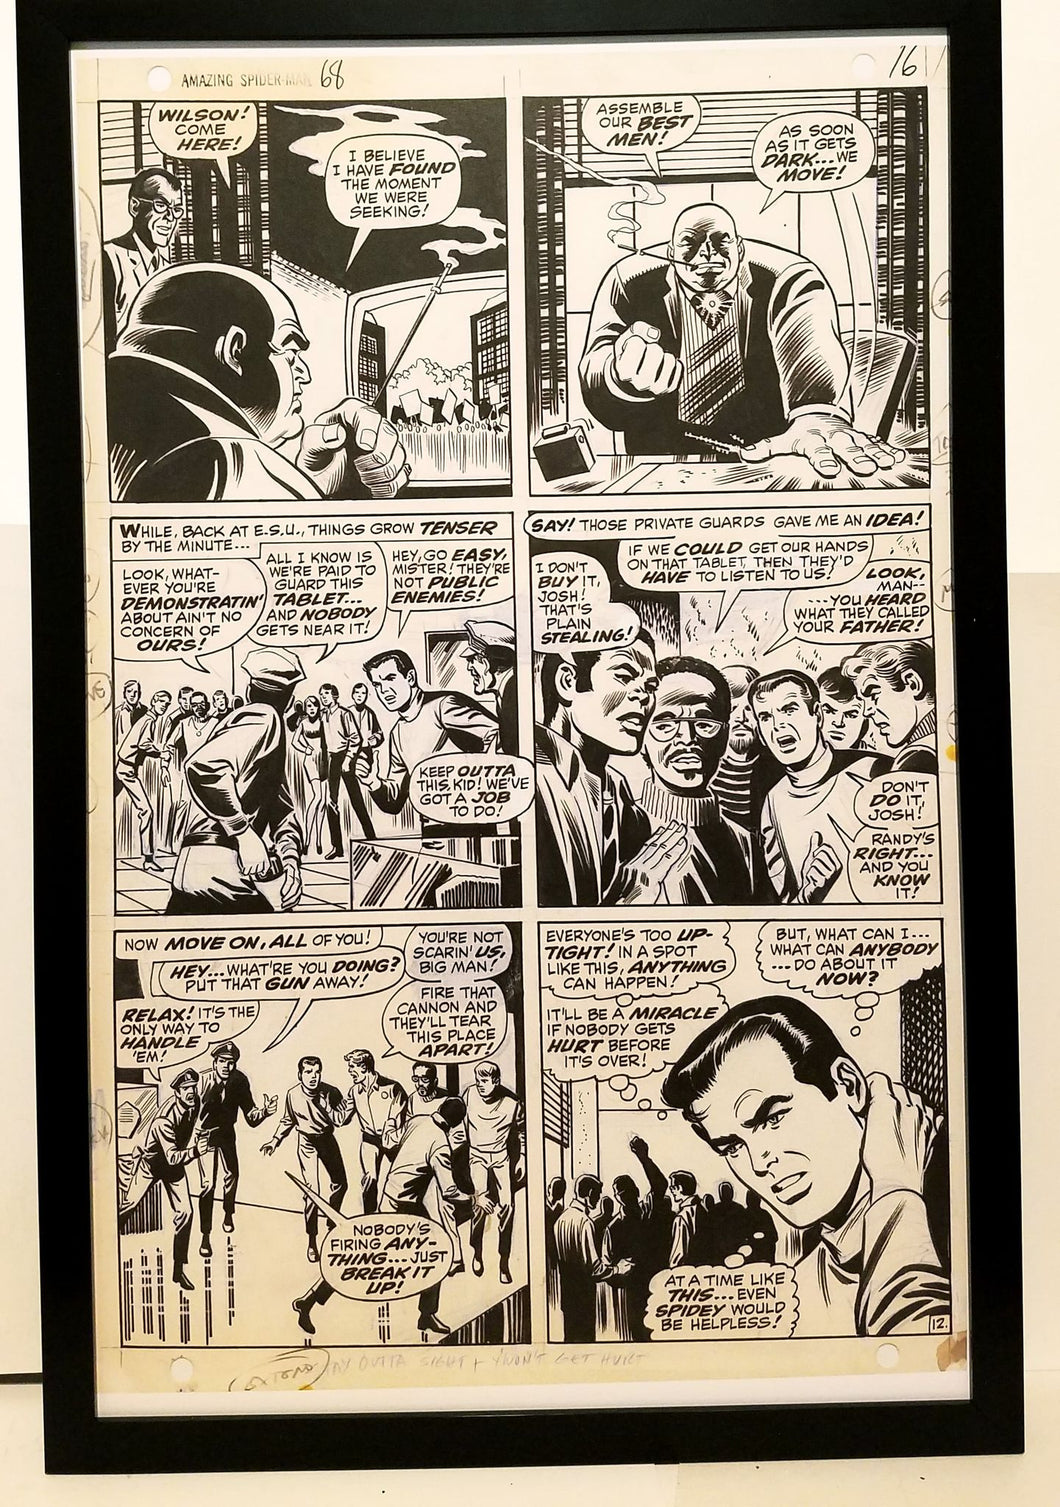 Amazing Spider-Man #68 pg. 12 John Romita 11x17 FRAMED Original Art Poster Marvel Comics